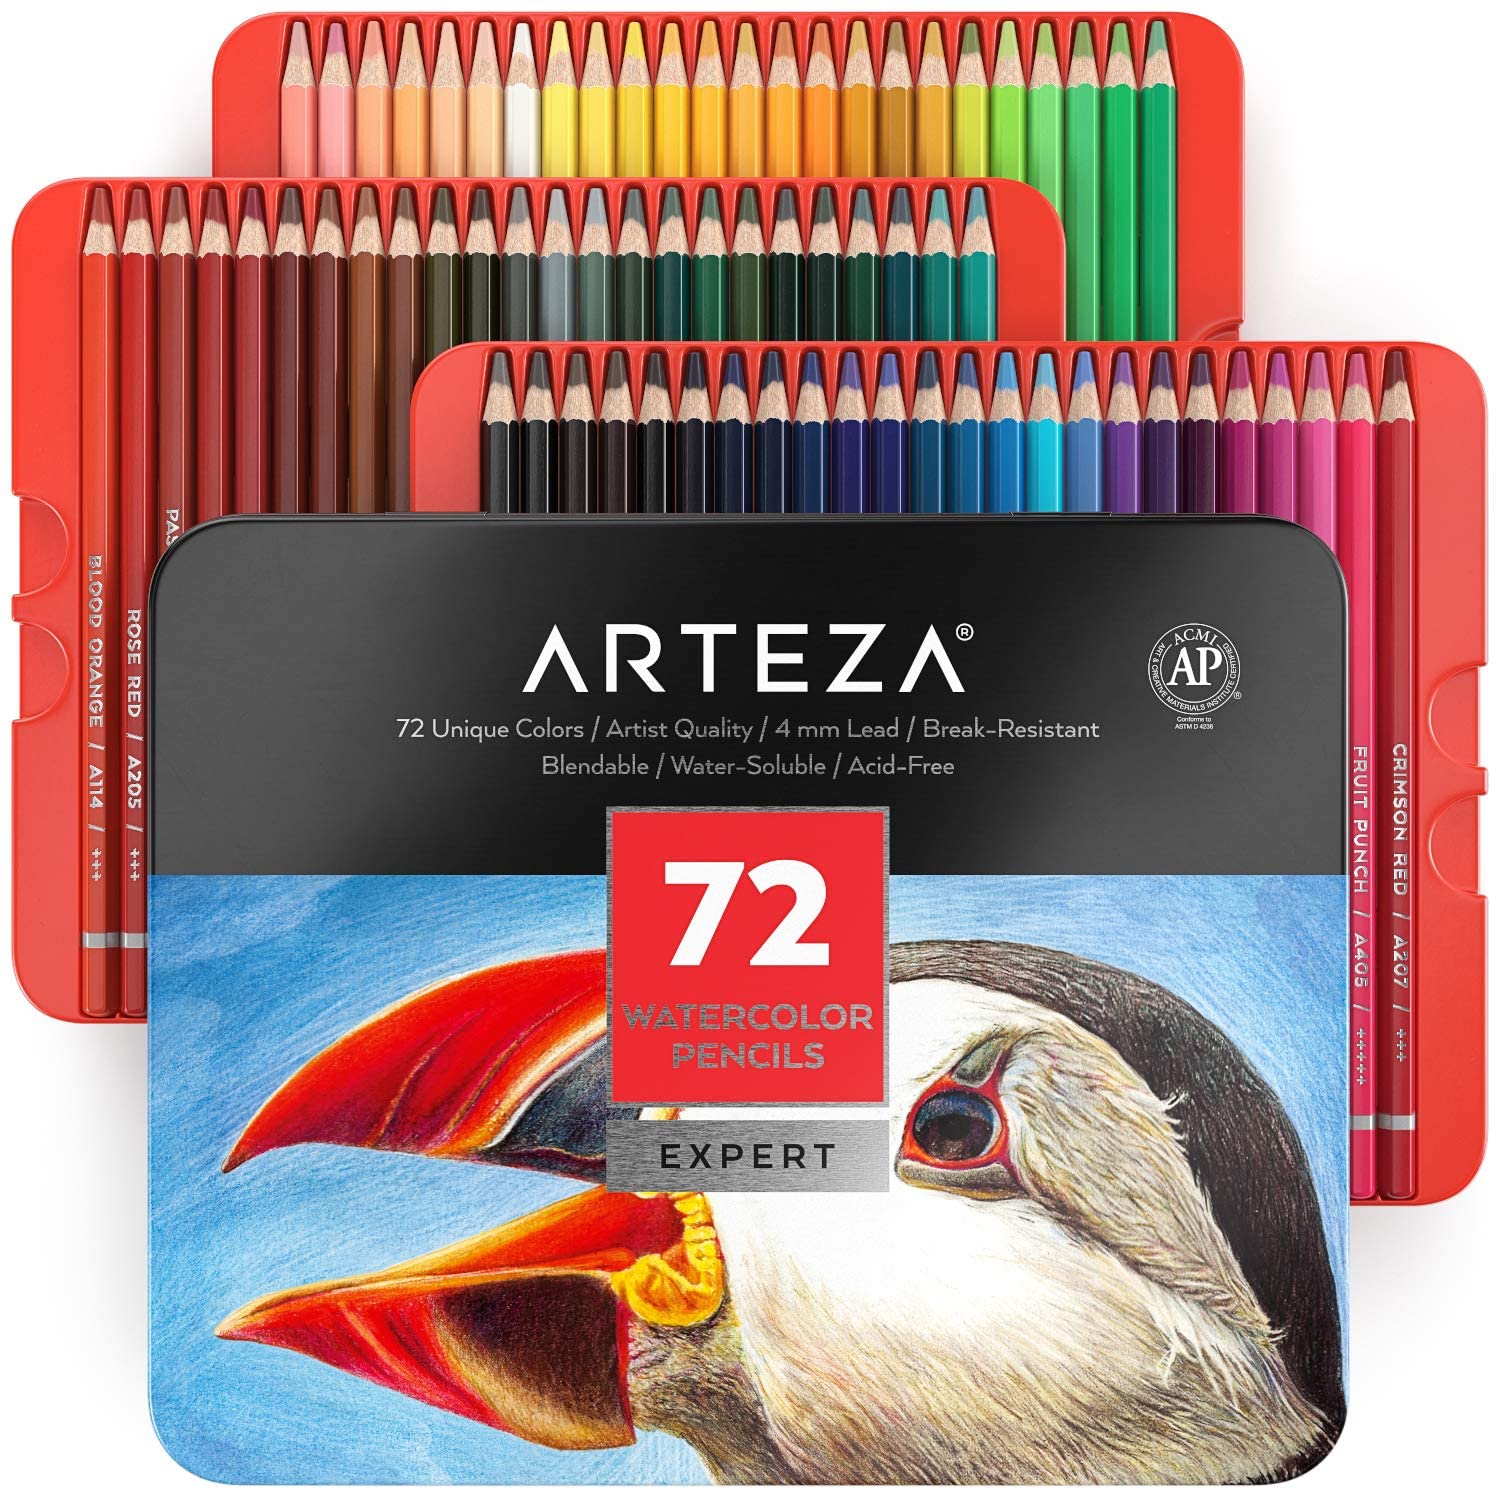 ARTEZA Break-Resistant Artist Watercolor Pencils, 72-Count